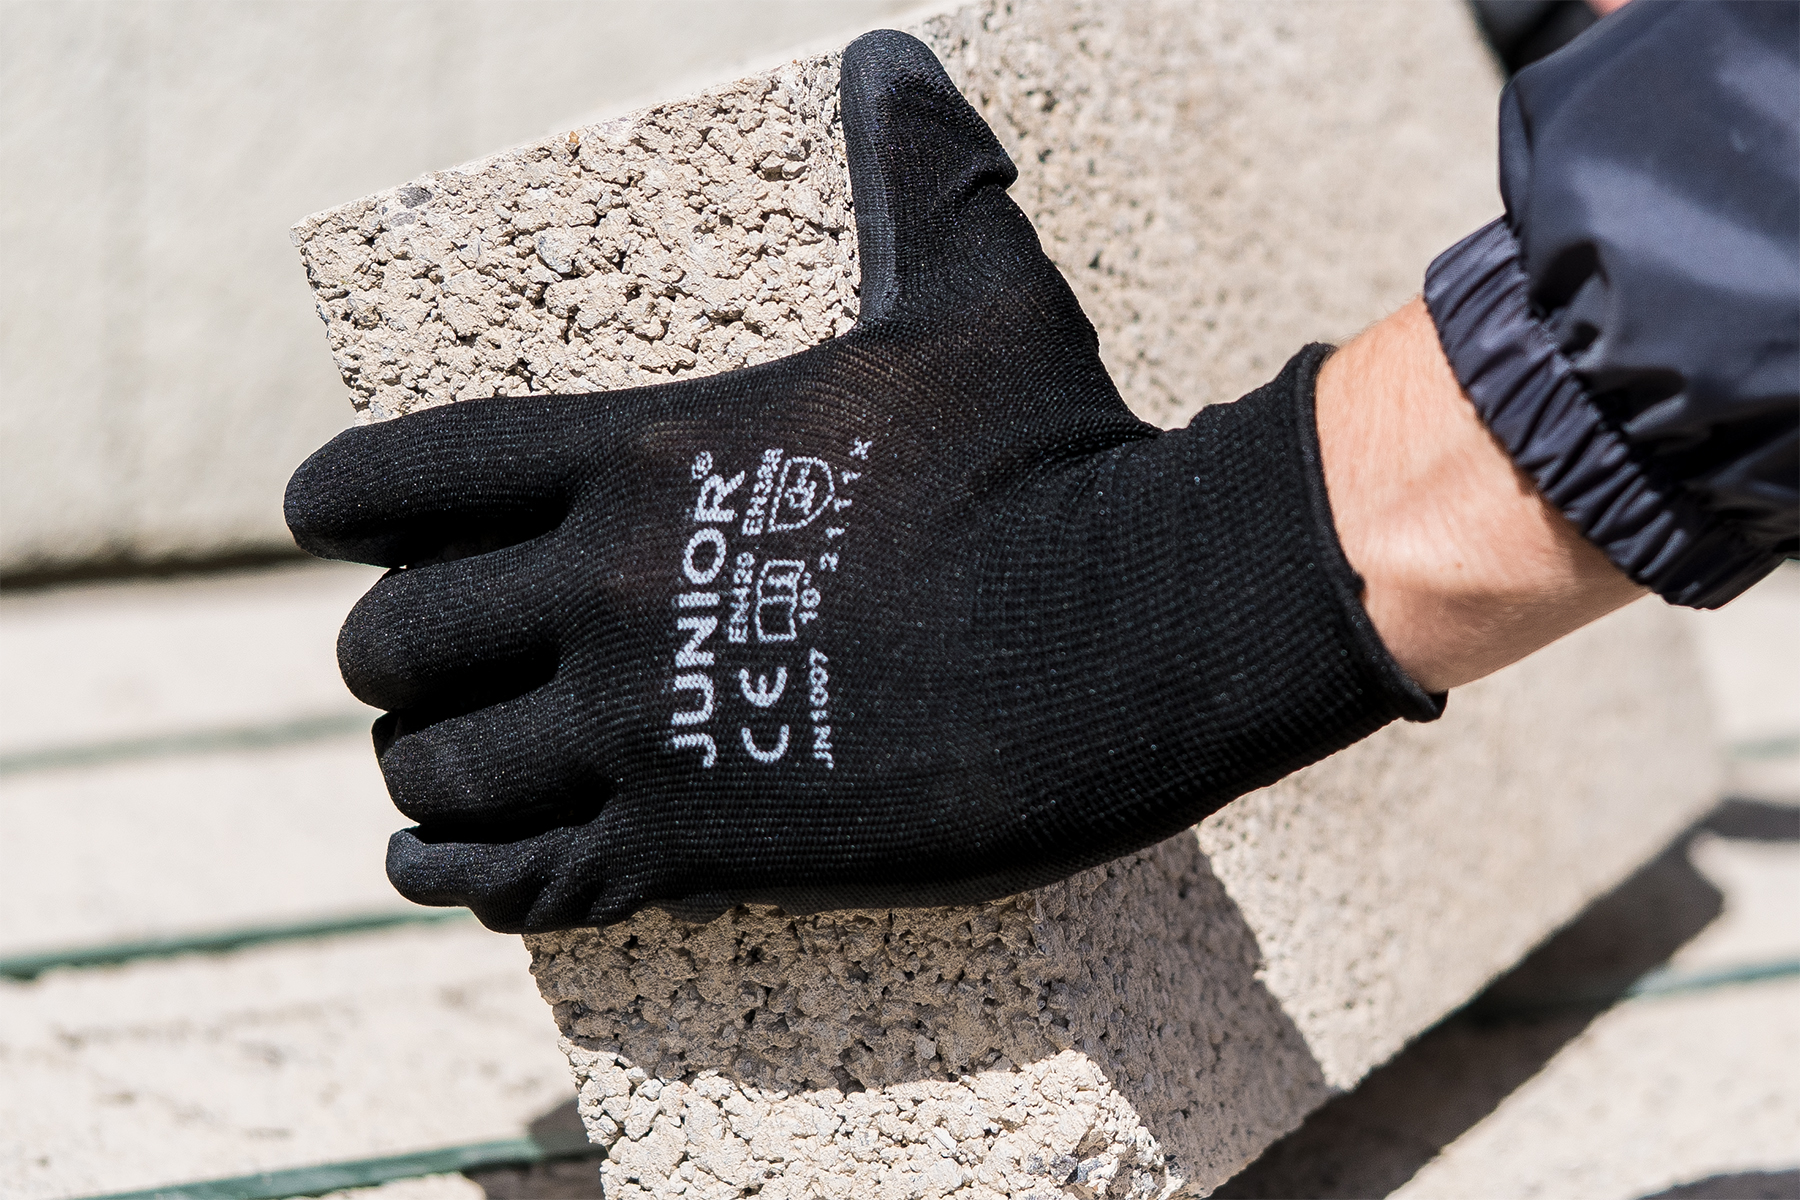 Nitrile Coated Safety Gloves